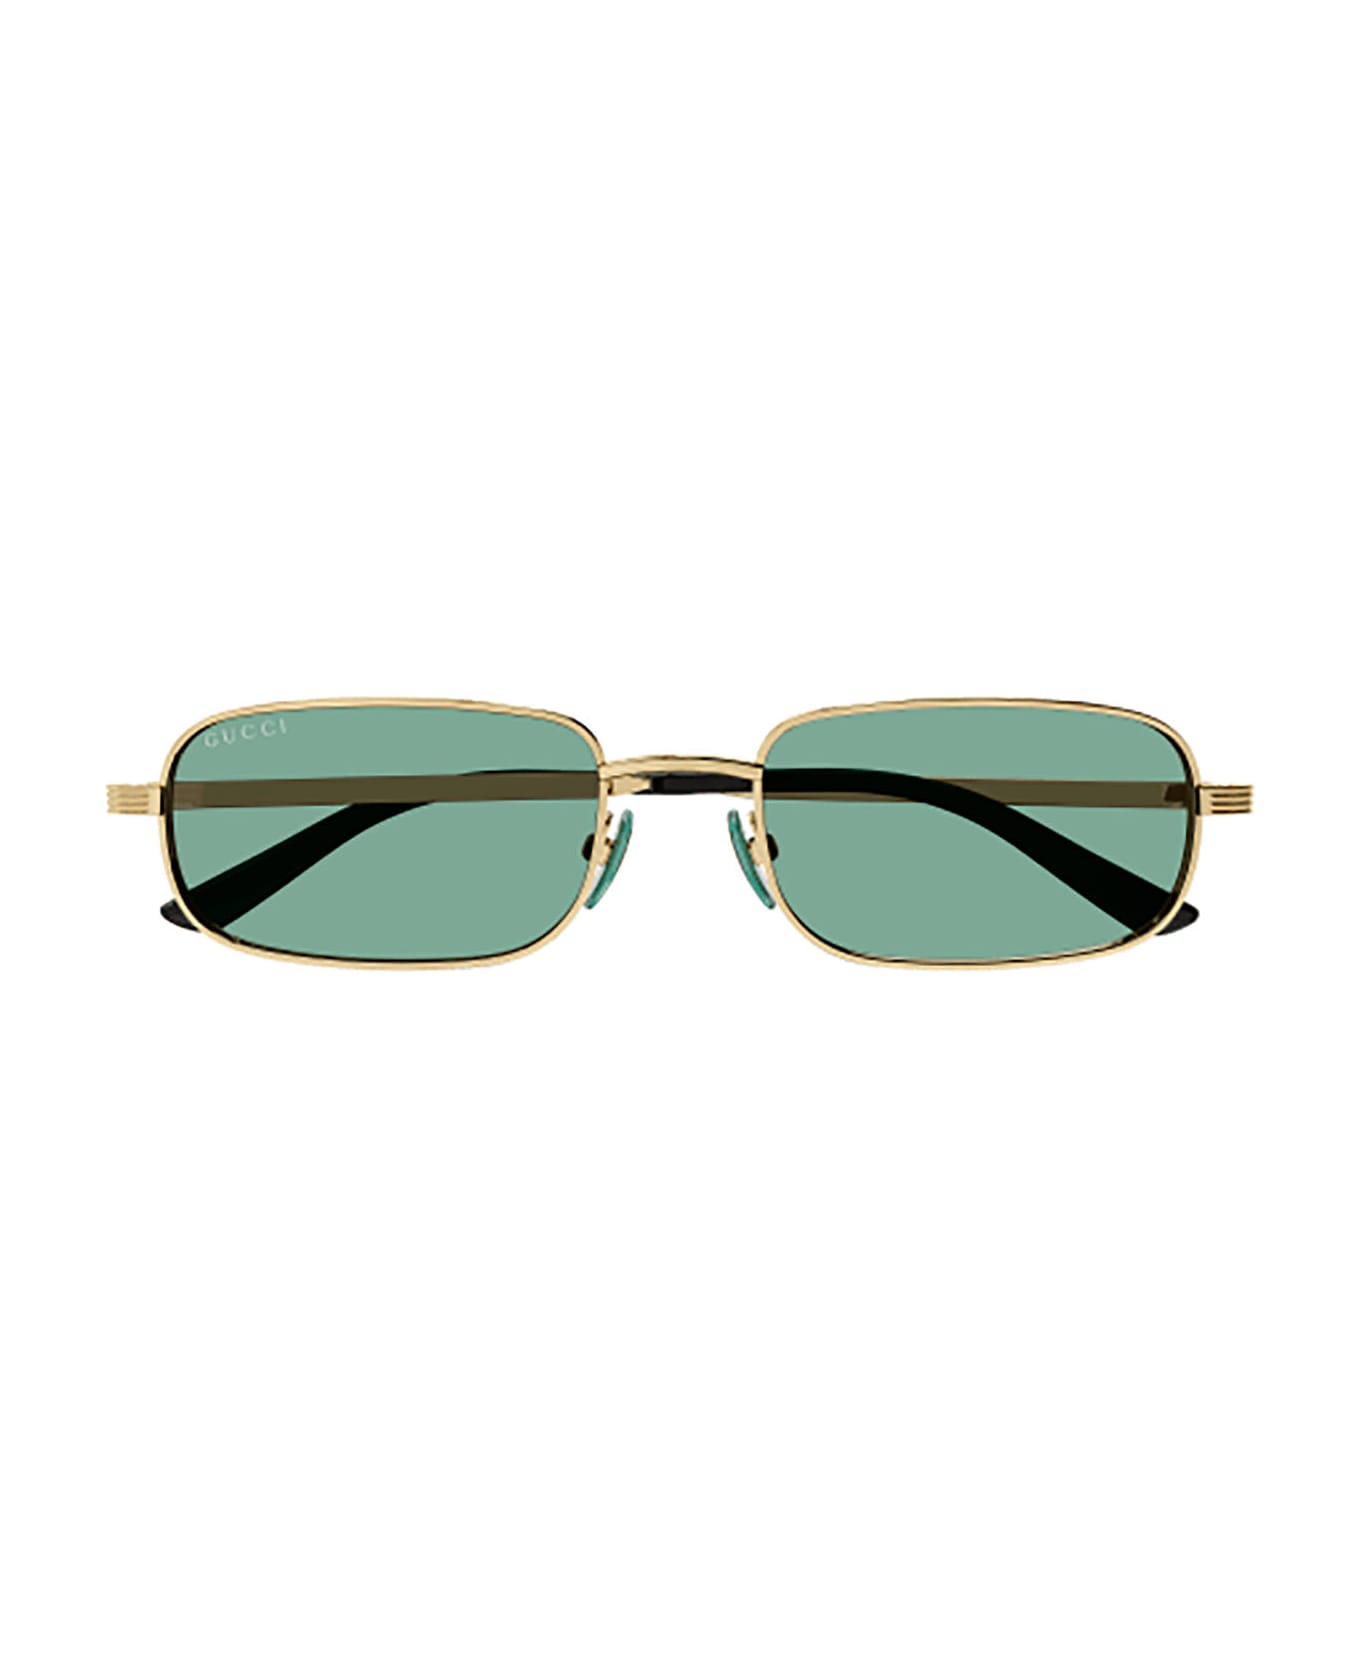 Gucci Eyewear Gg1457s Sunglasses - 005 gold gold green サングラス